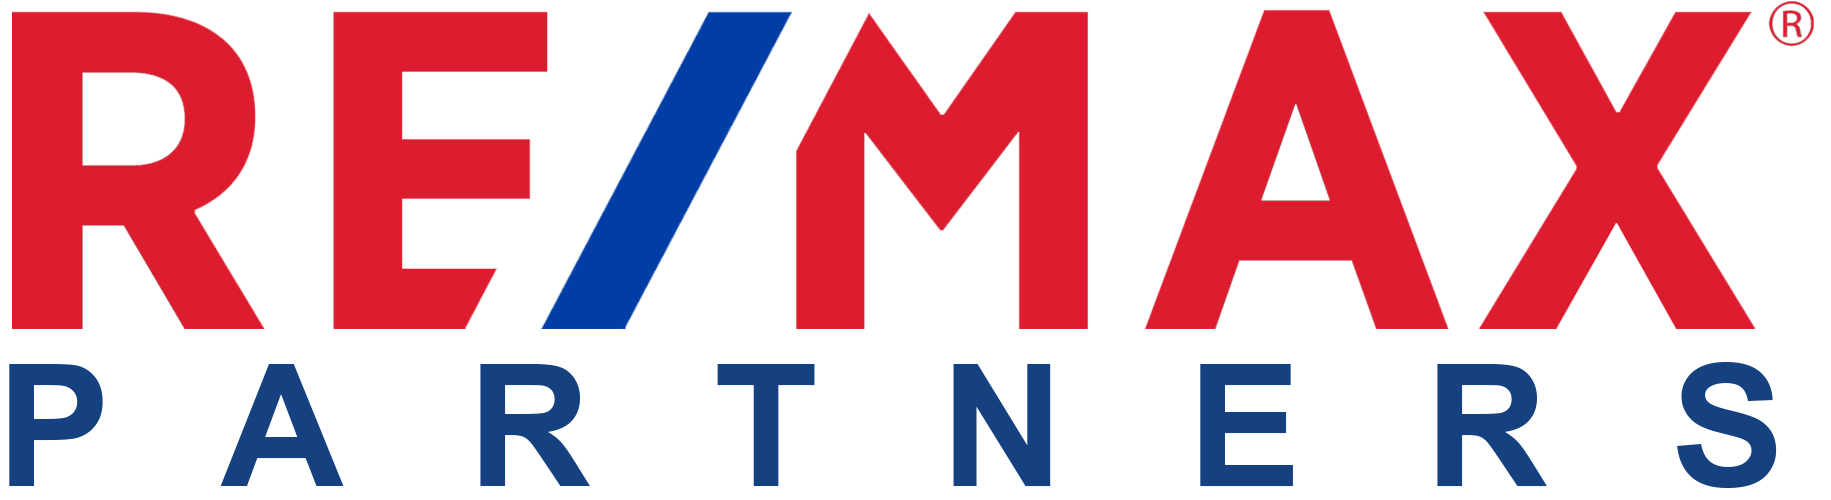 REMAX Partners logo